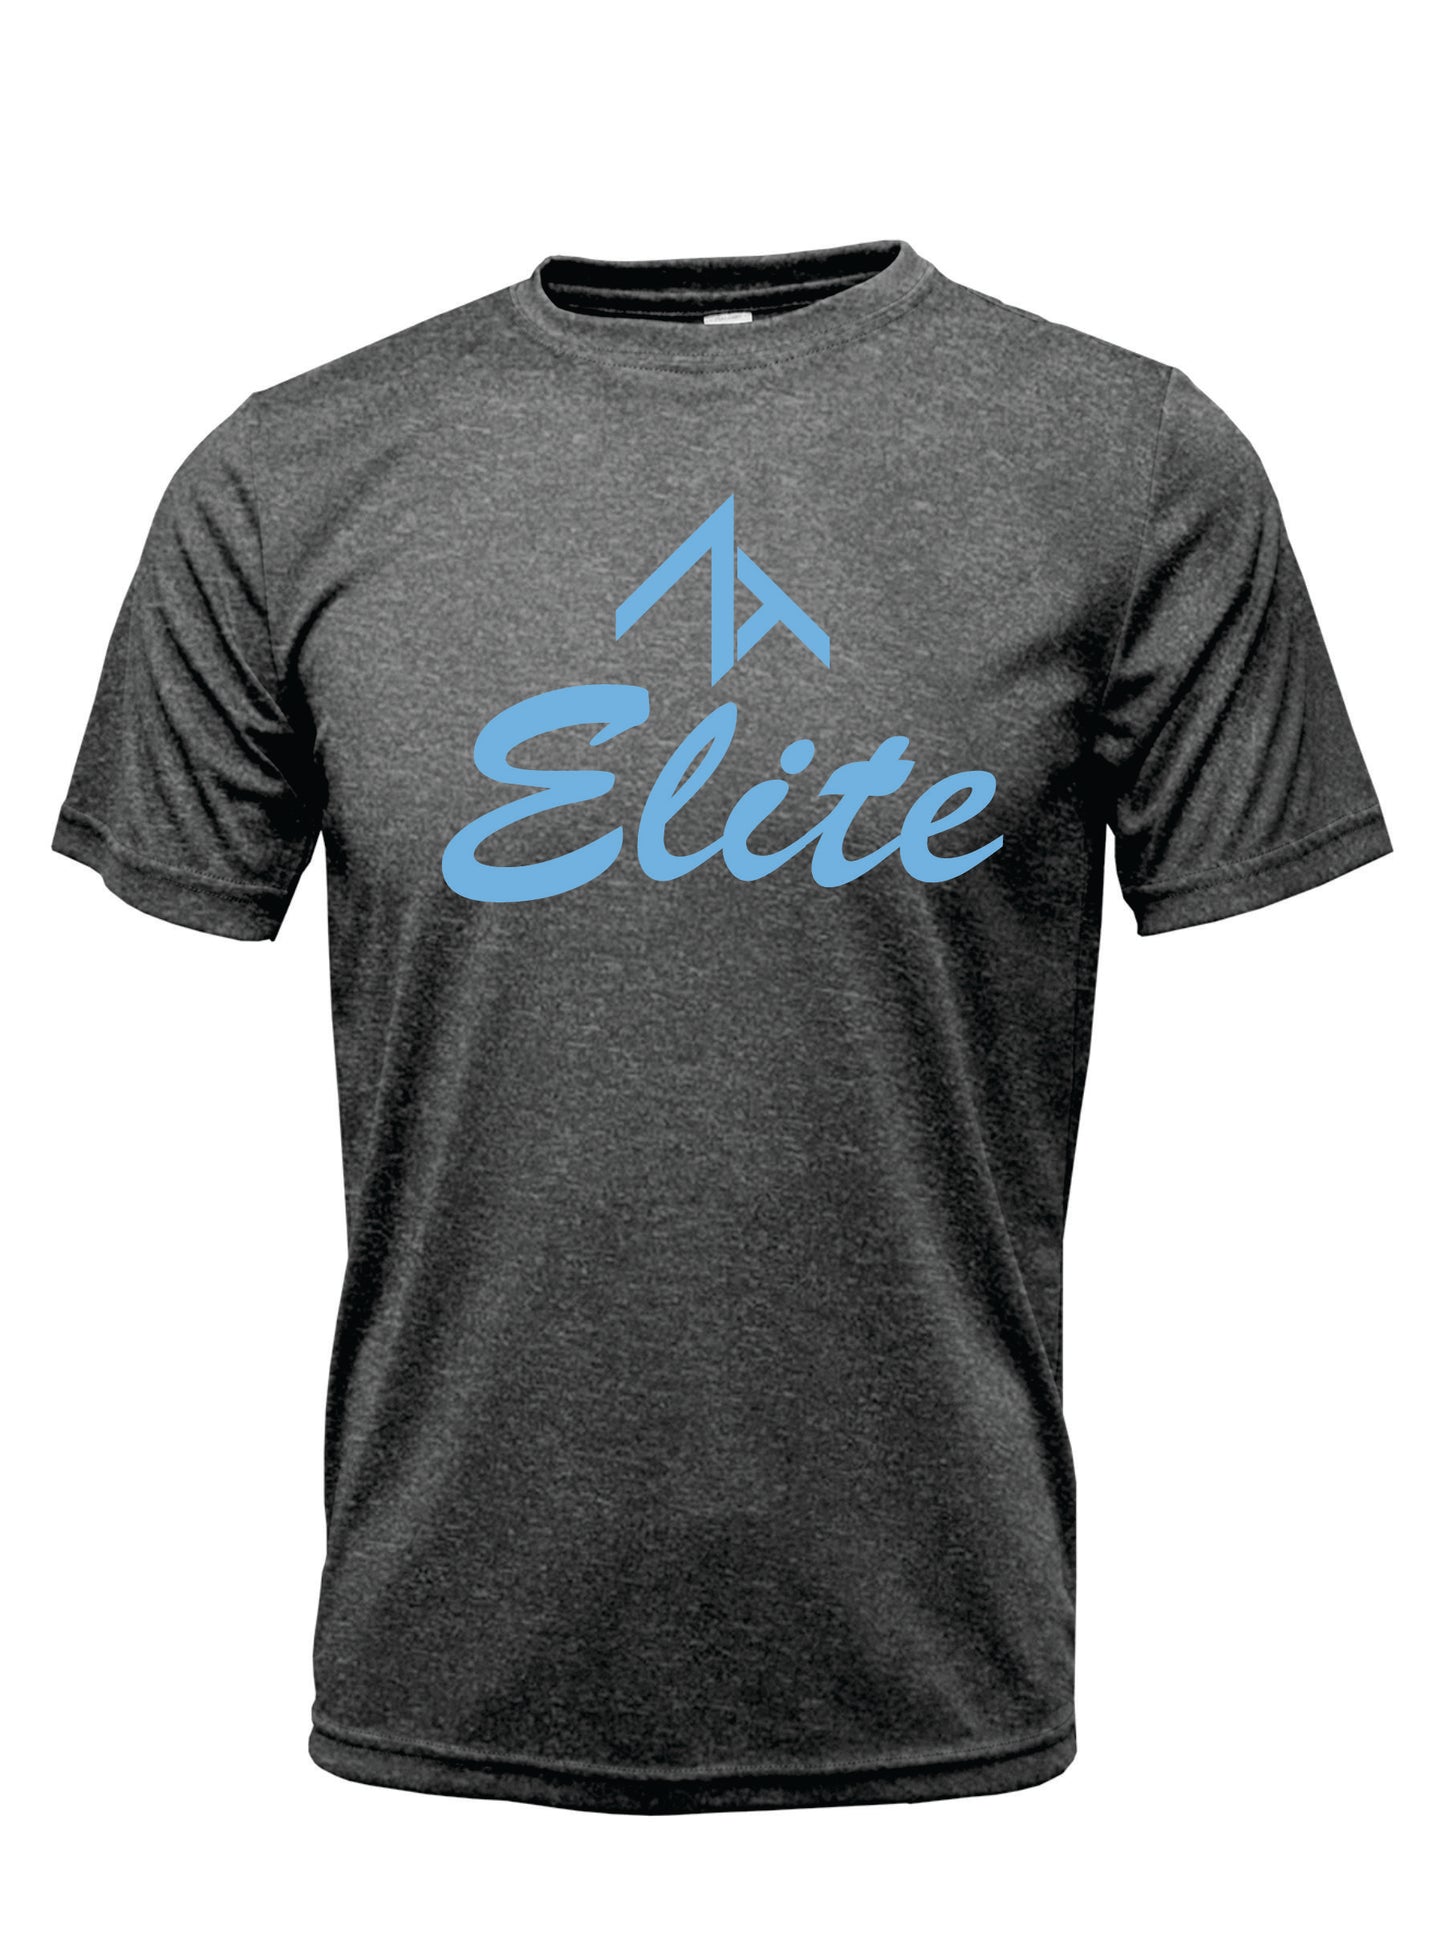 Short Sleeve "CENTERED ELITE" Dri-Fit T-shirt